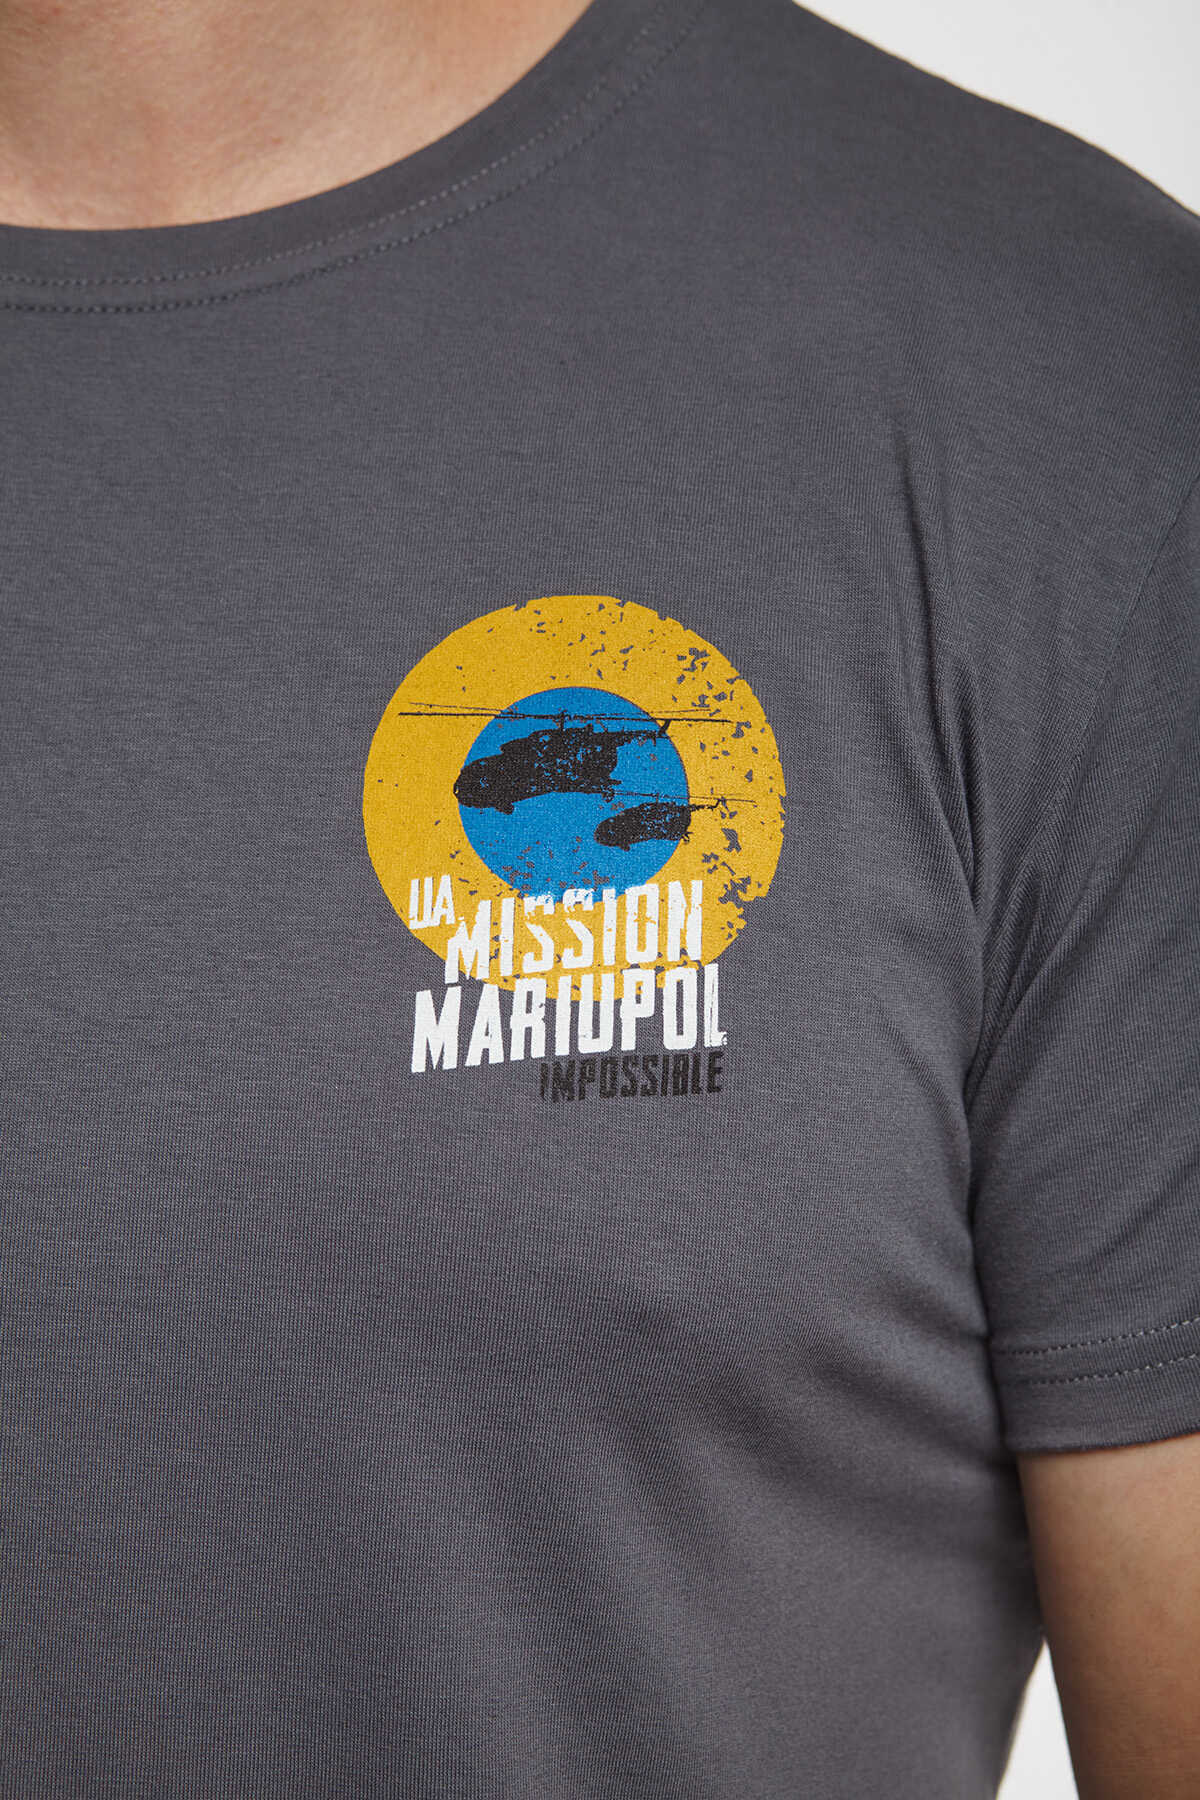 Men's T-Shirt Mission Mariupol. Color gray. 
Material: 95% cotton, 5% spandex.